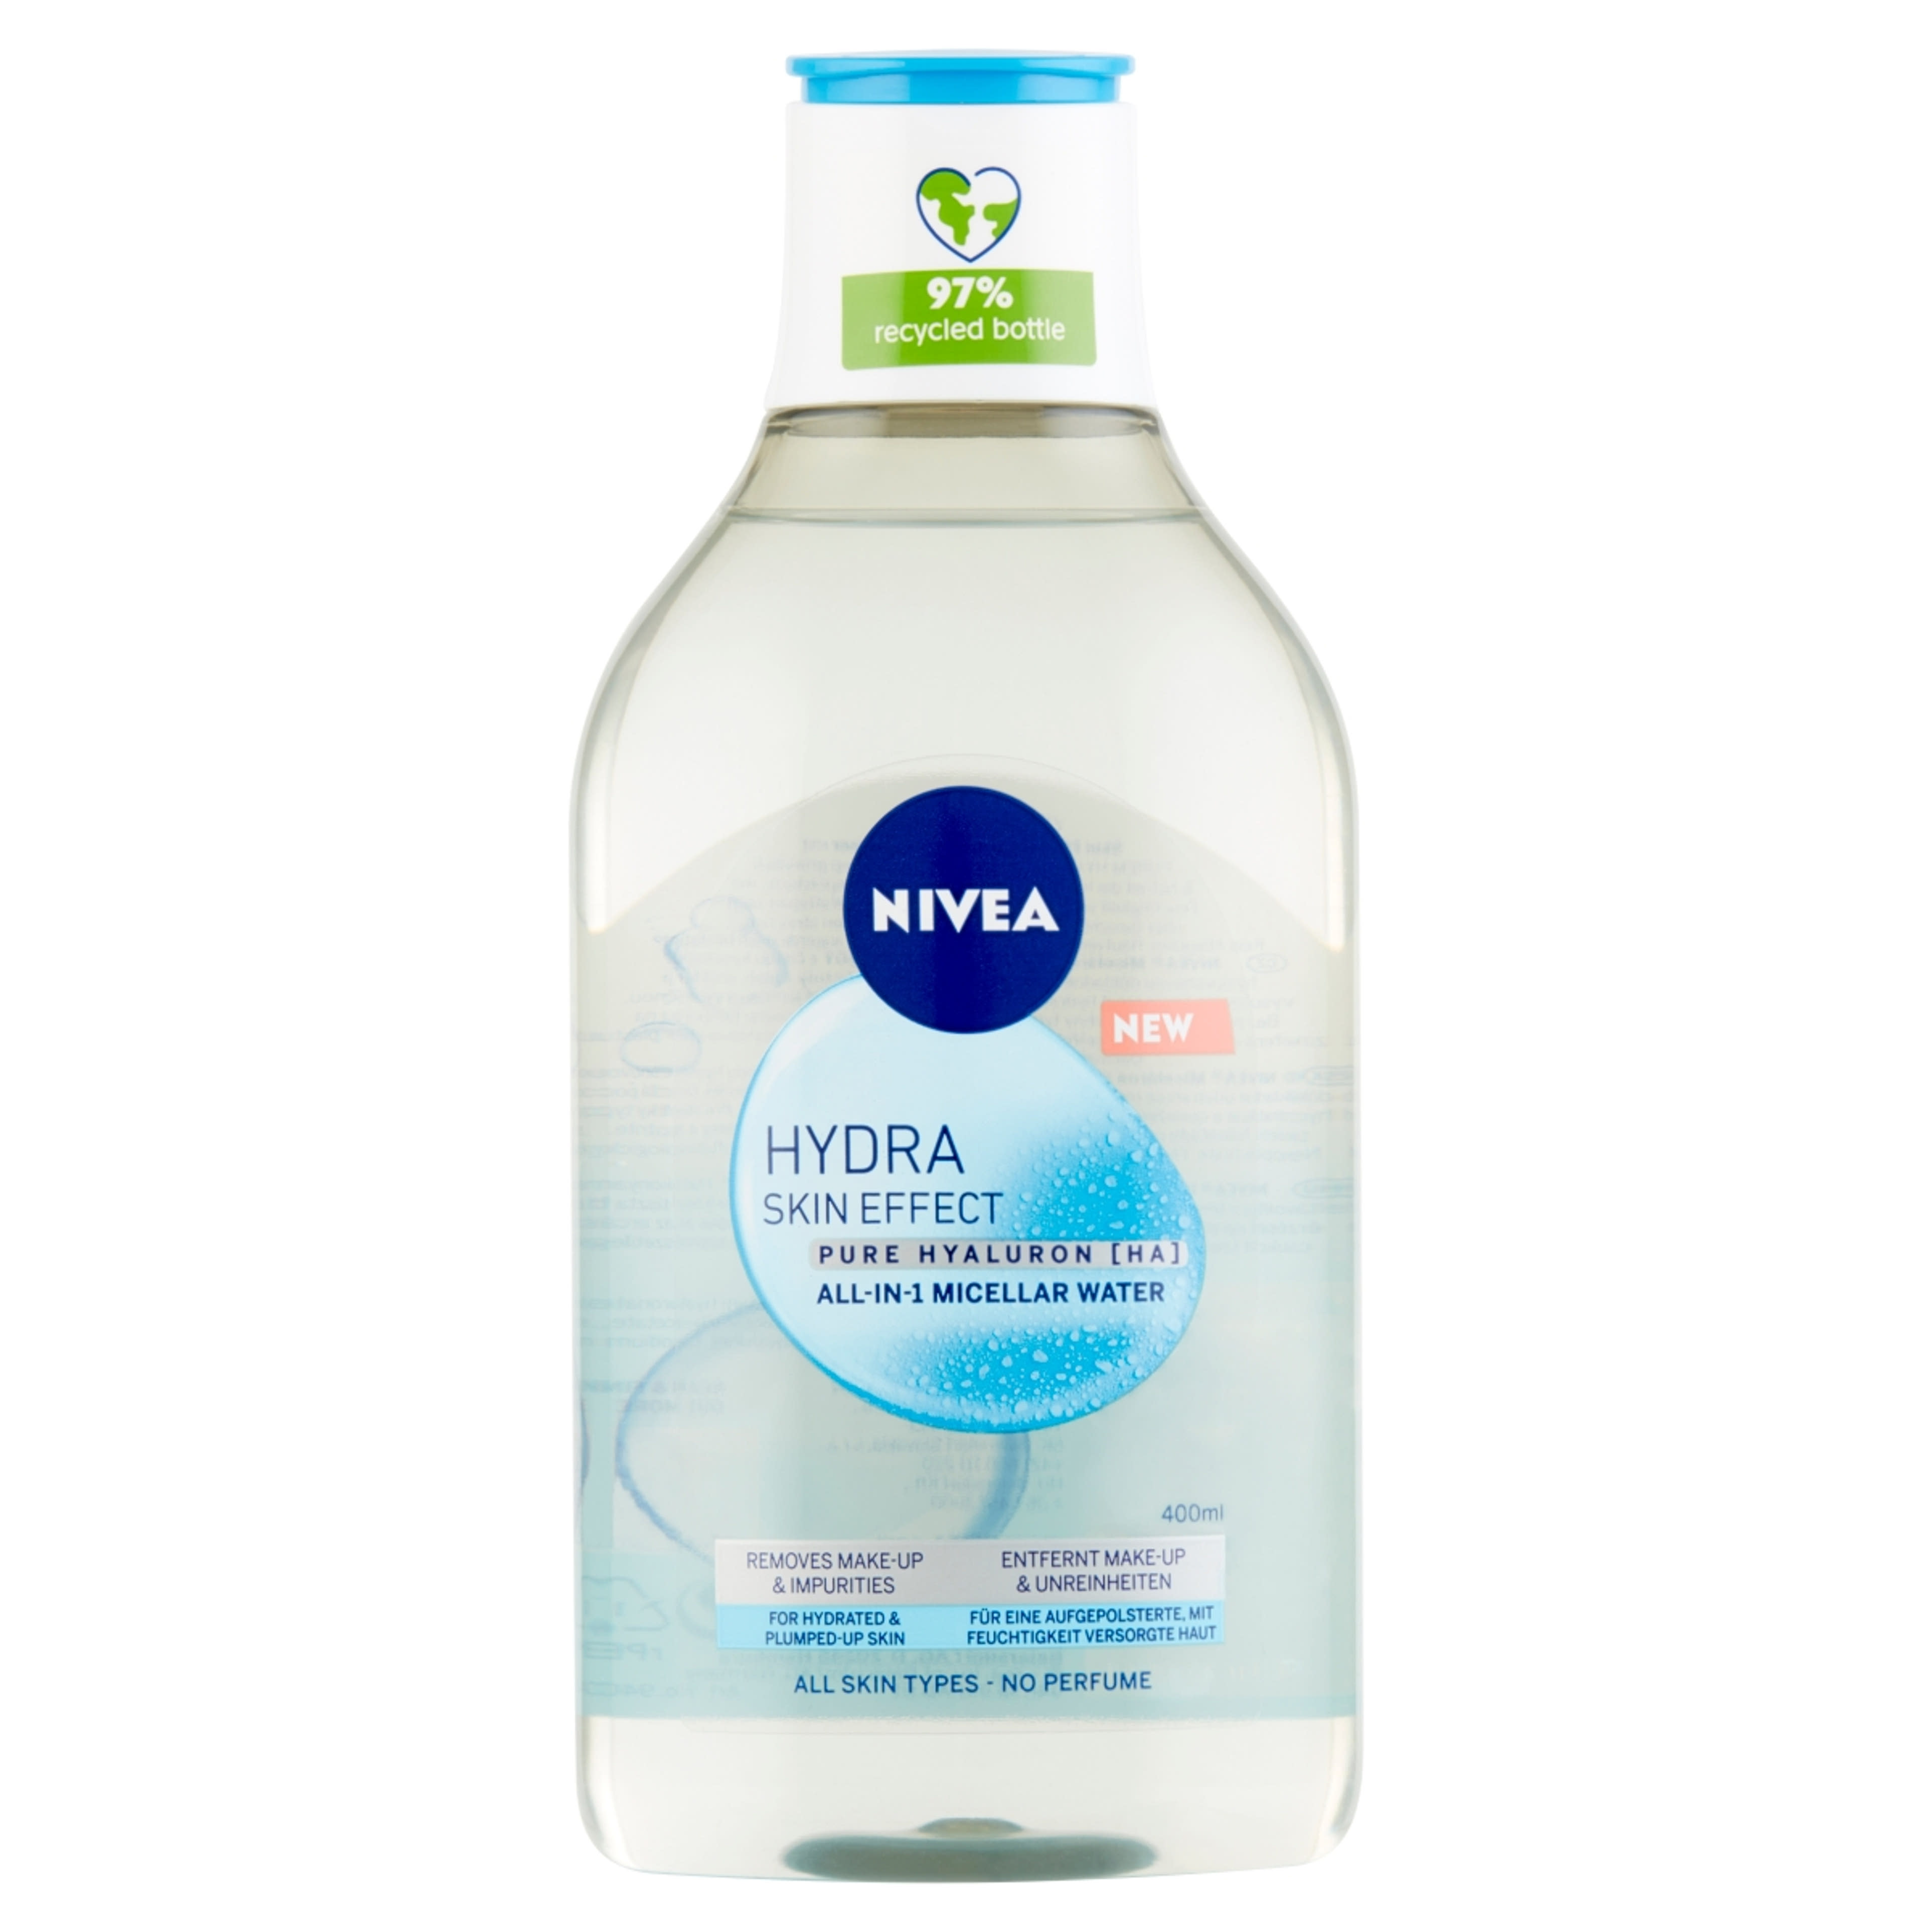 NIVEA Hydra Skin Effect micellás víz - 400 ml-3